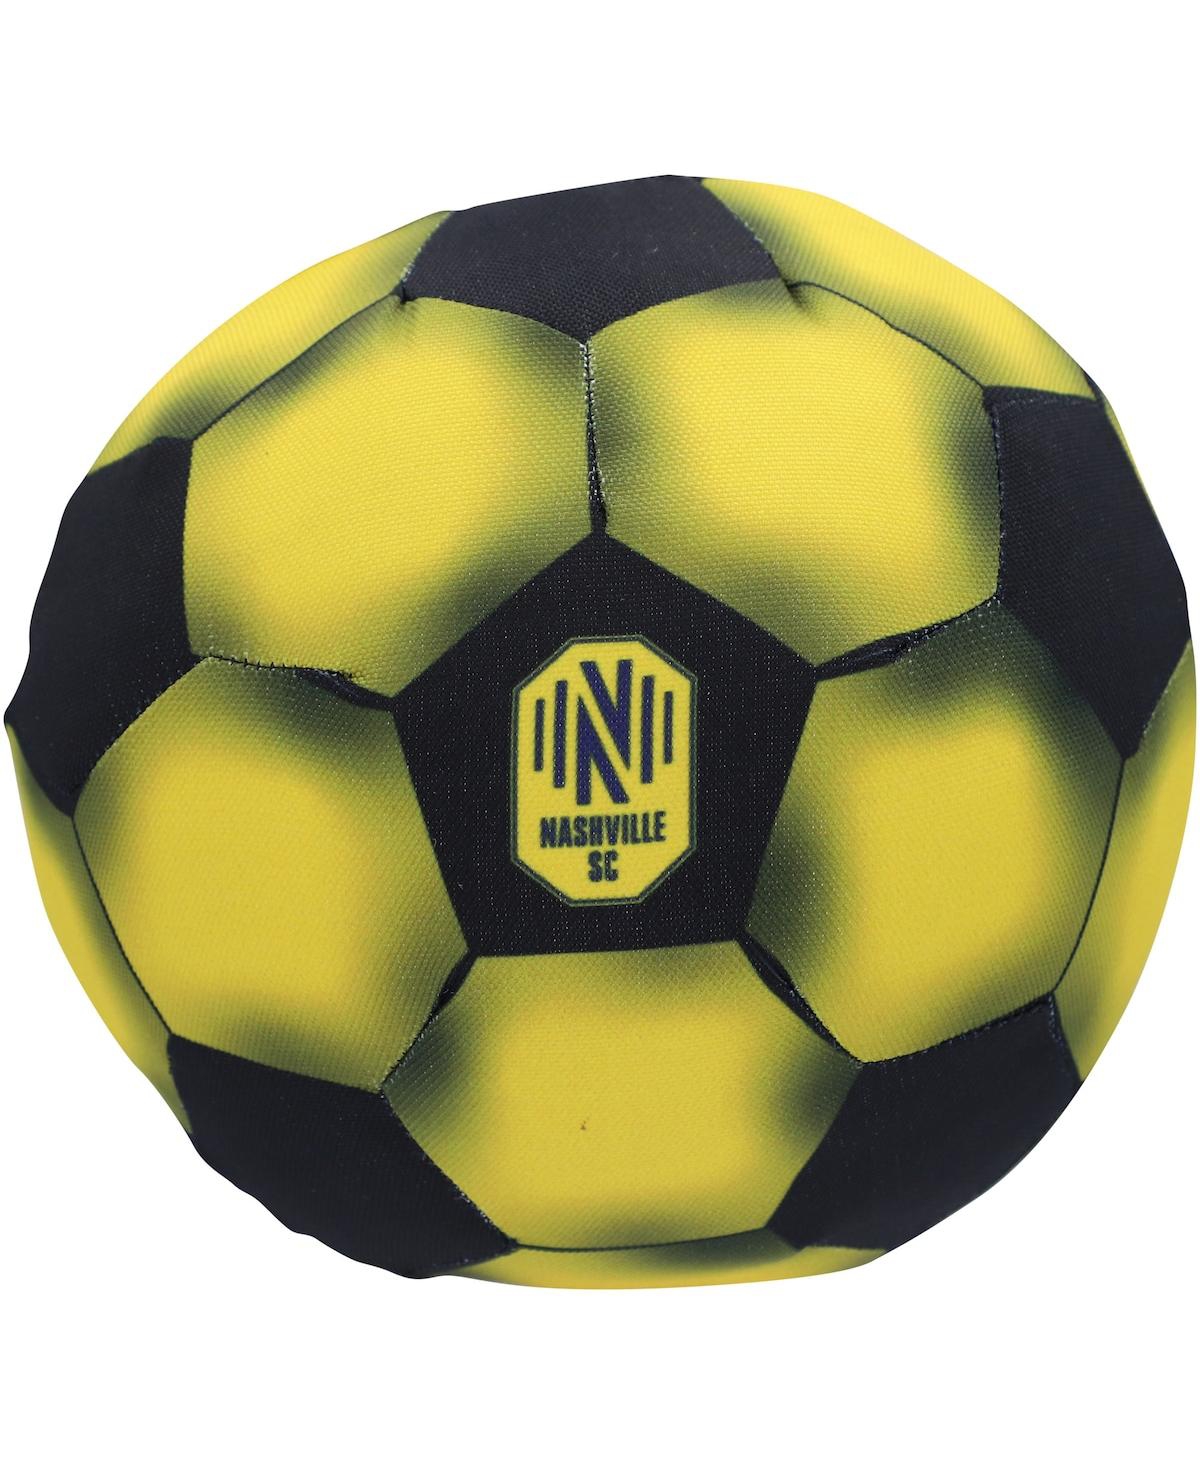 Nashville Sc Soccer Ball Plush Dog Toy - Yellow